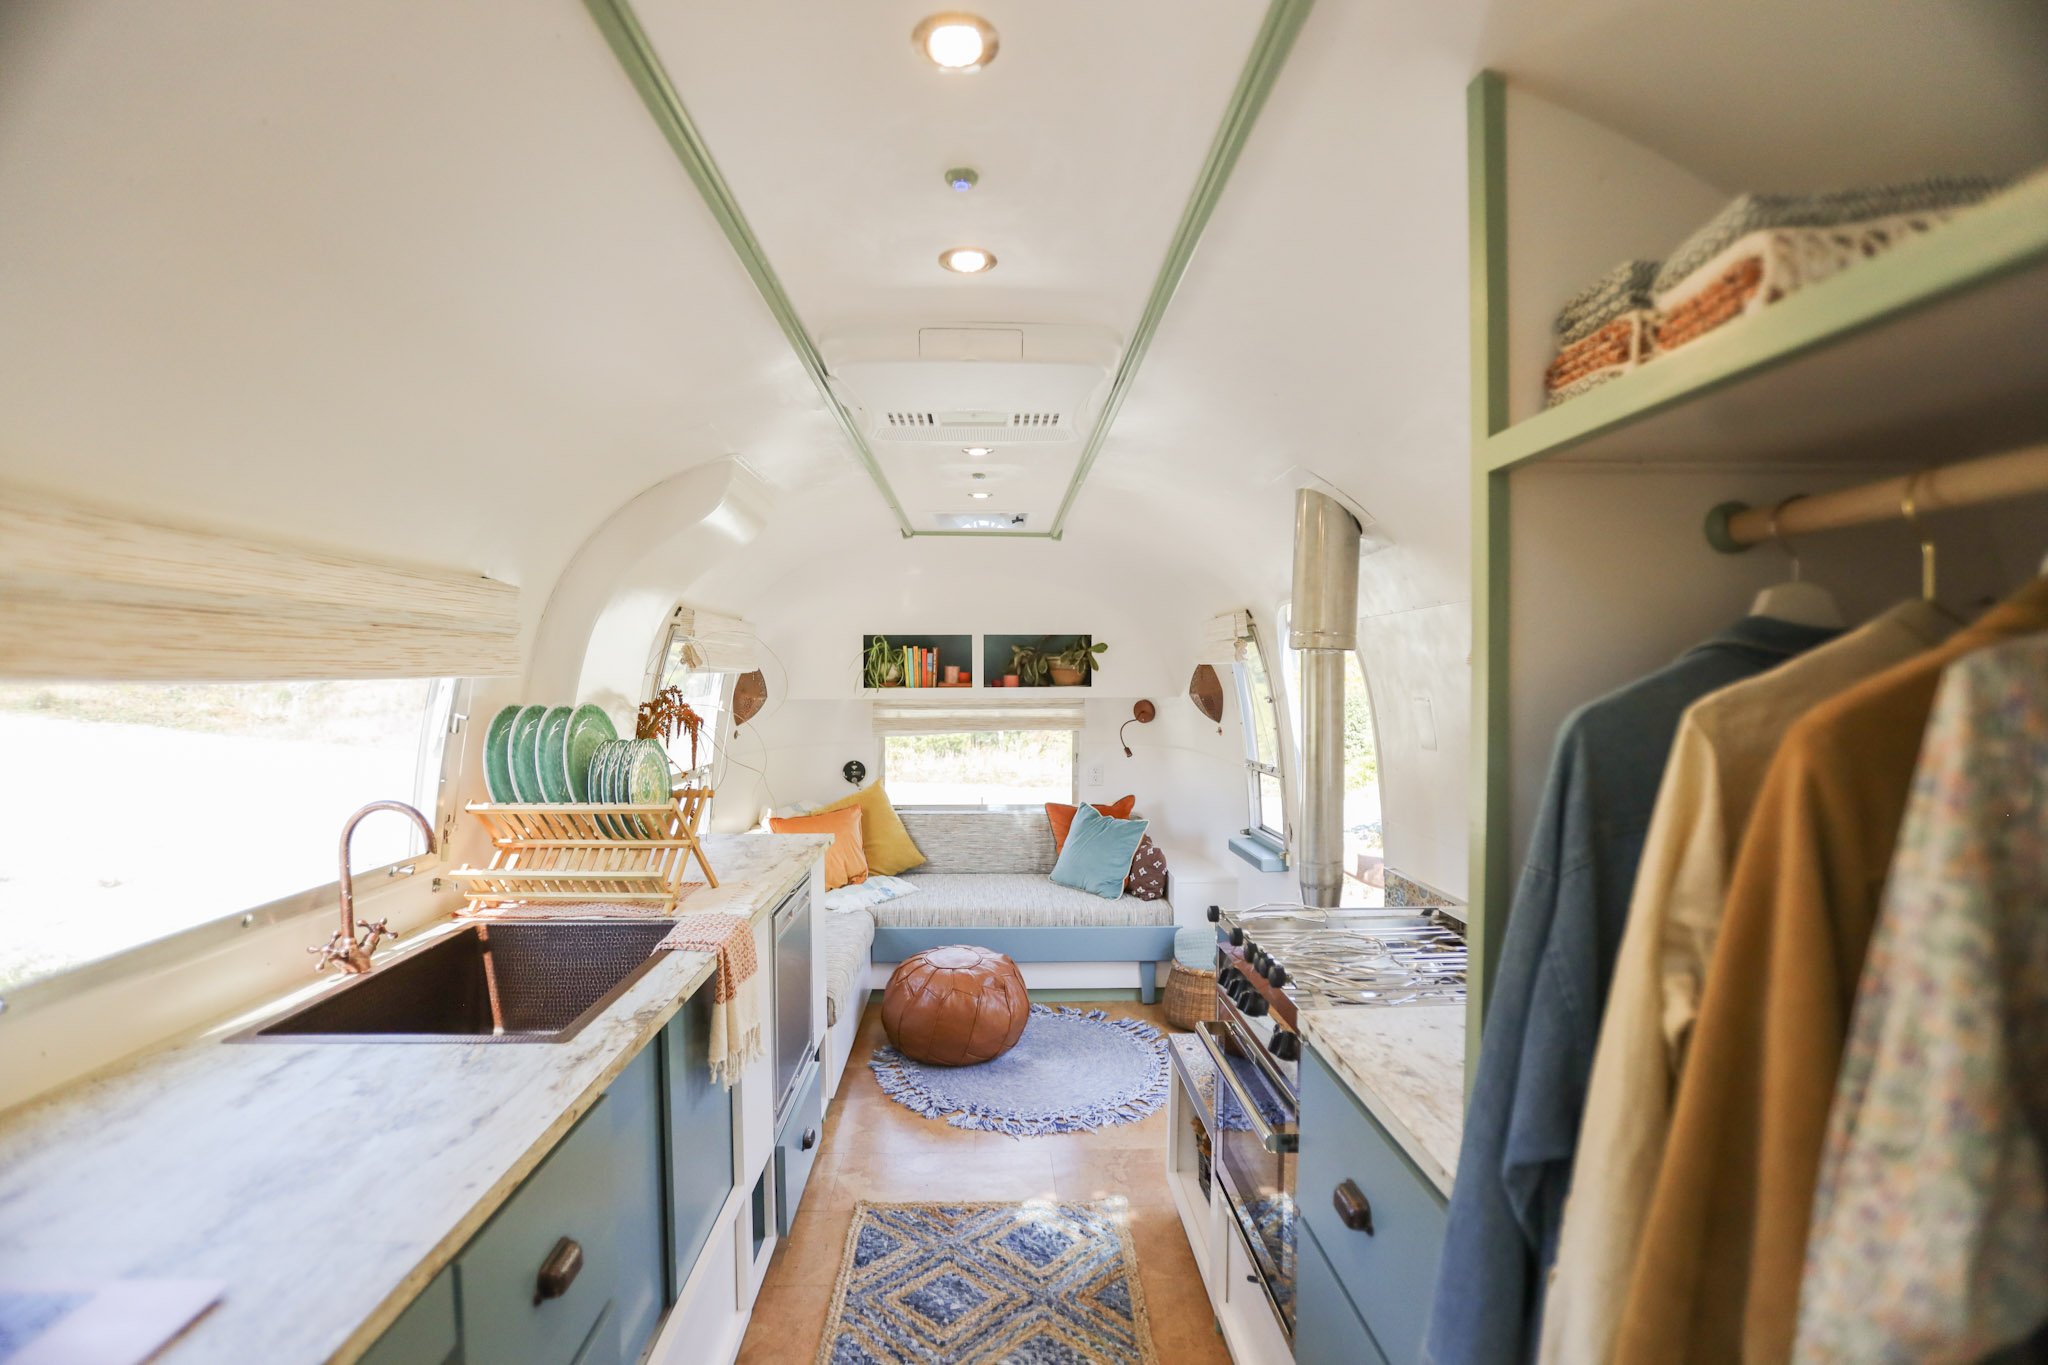 The Airstream - West Coast Indie